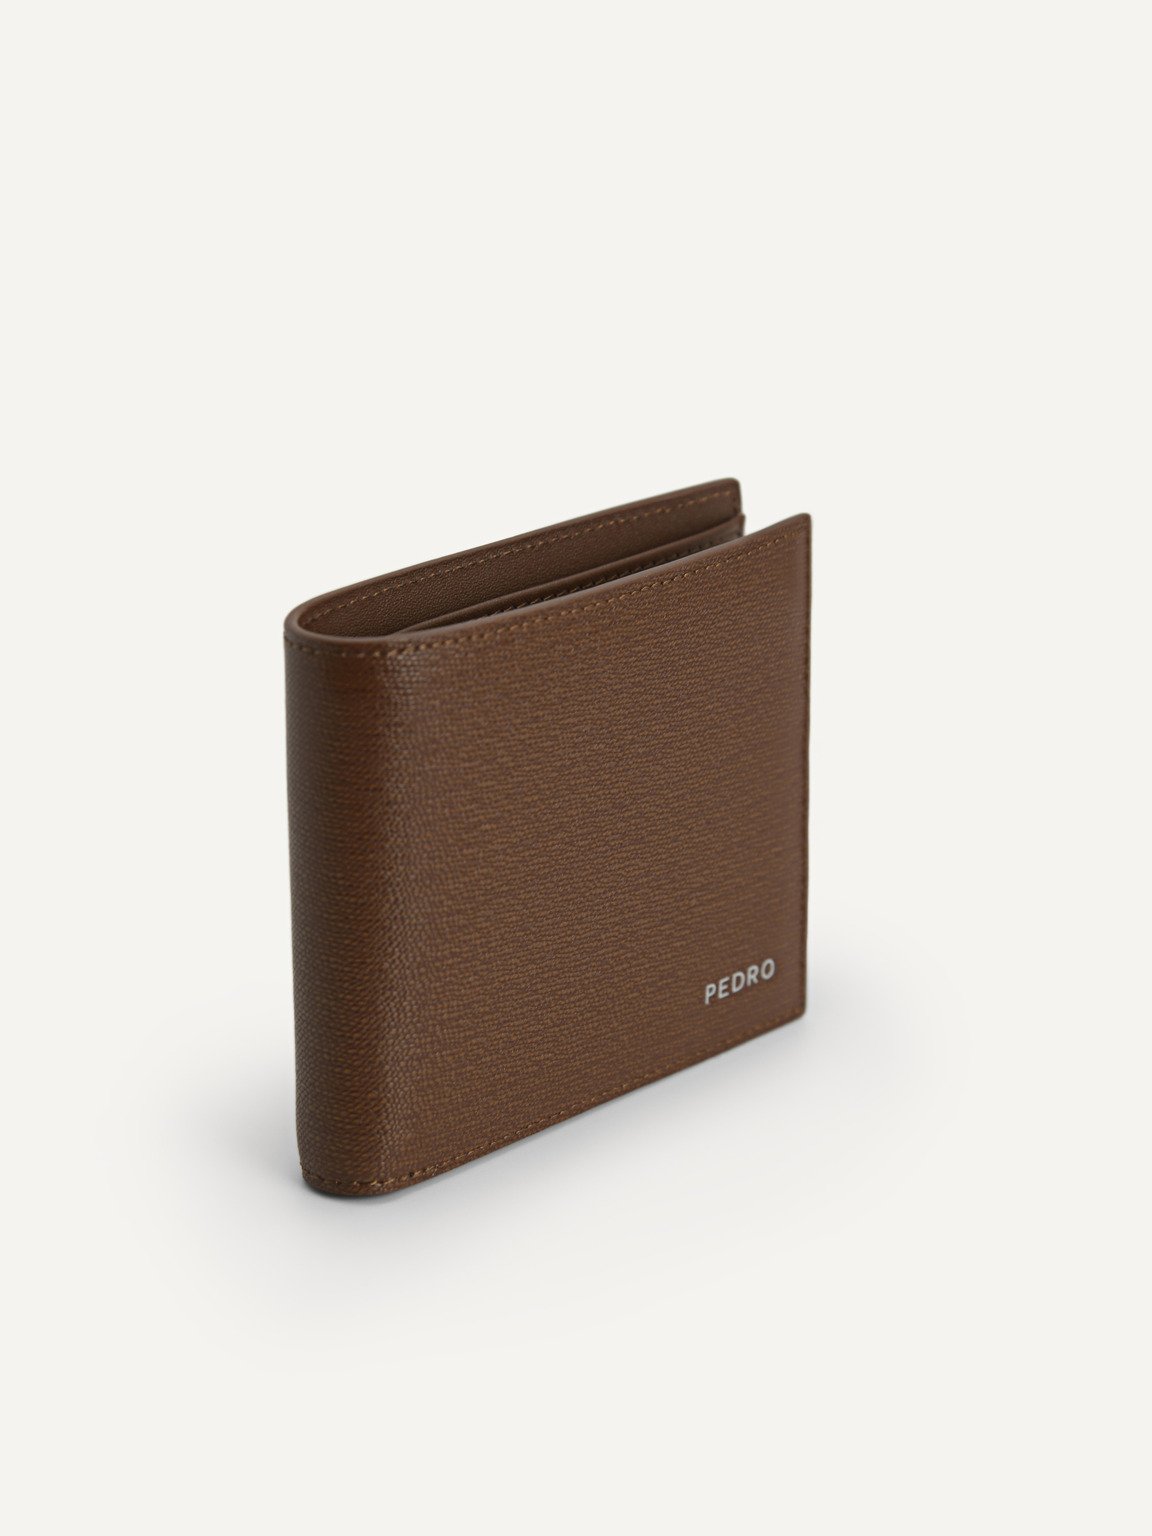 Full-Grain Leather Wallet with Insert, Dark Brown